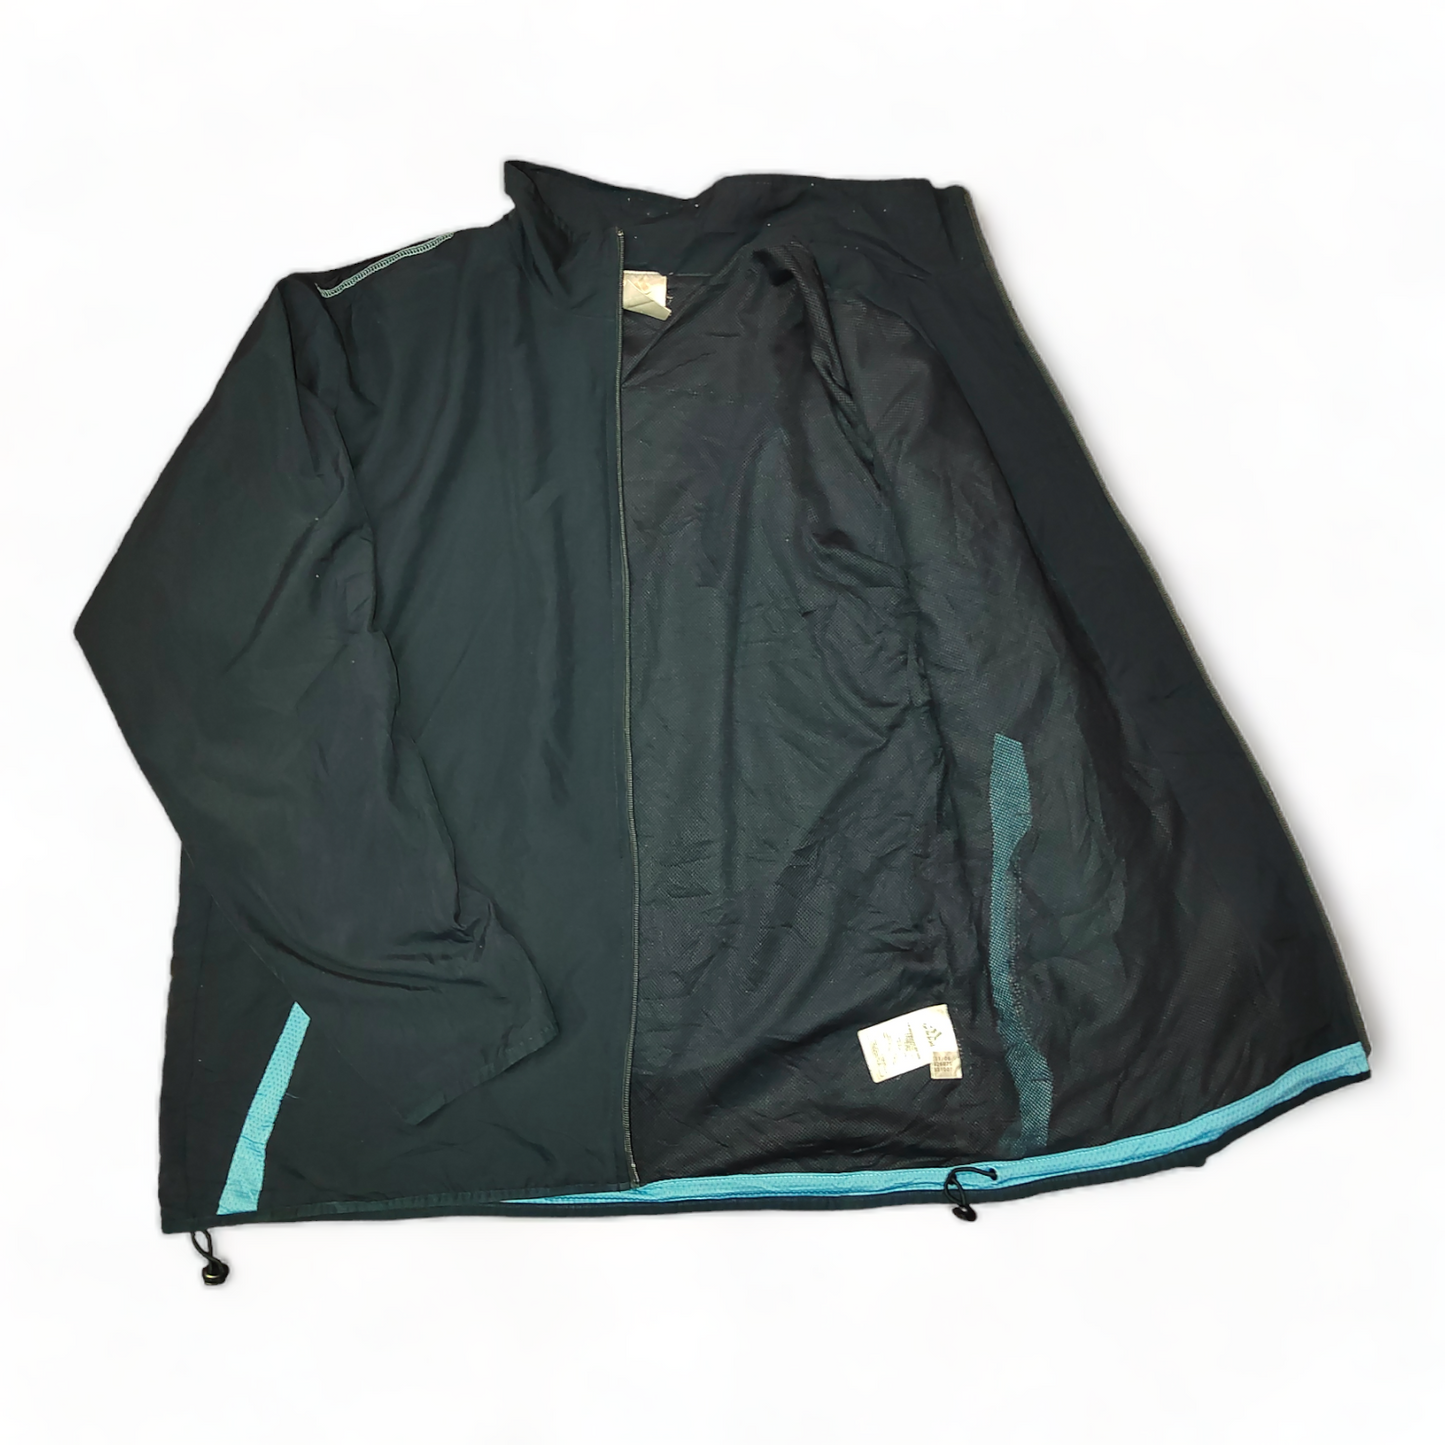 Adidas Jacket Mens Large Navy Blue Zip Up